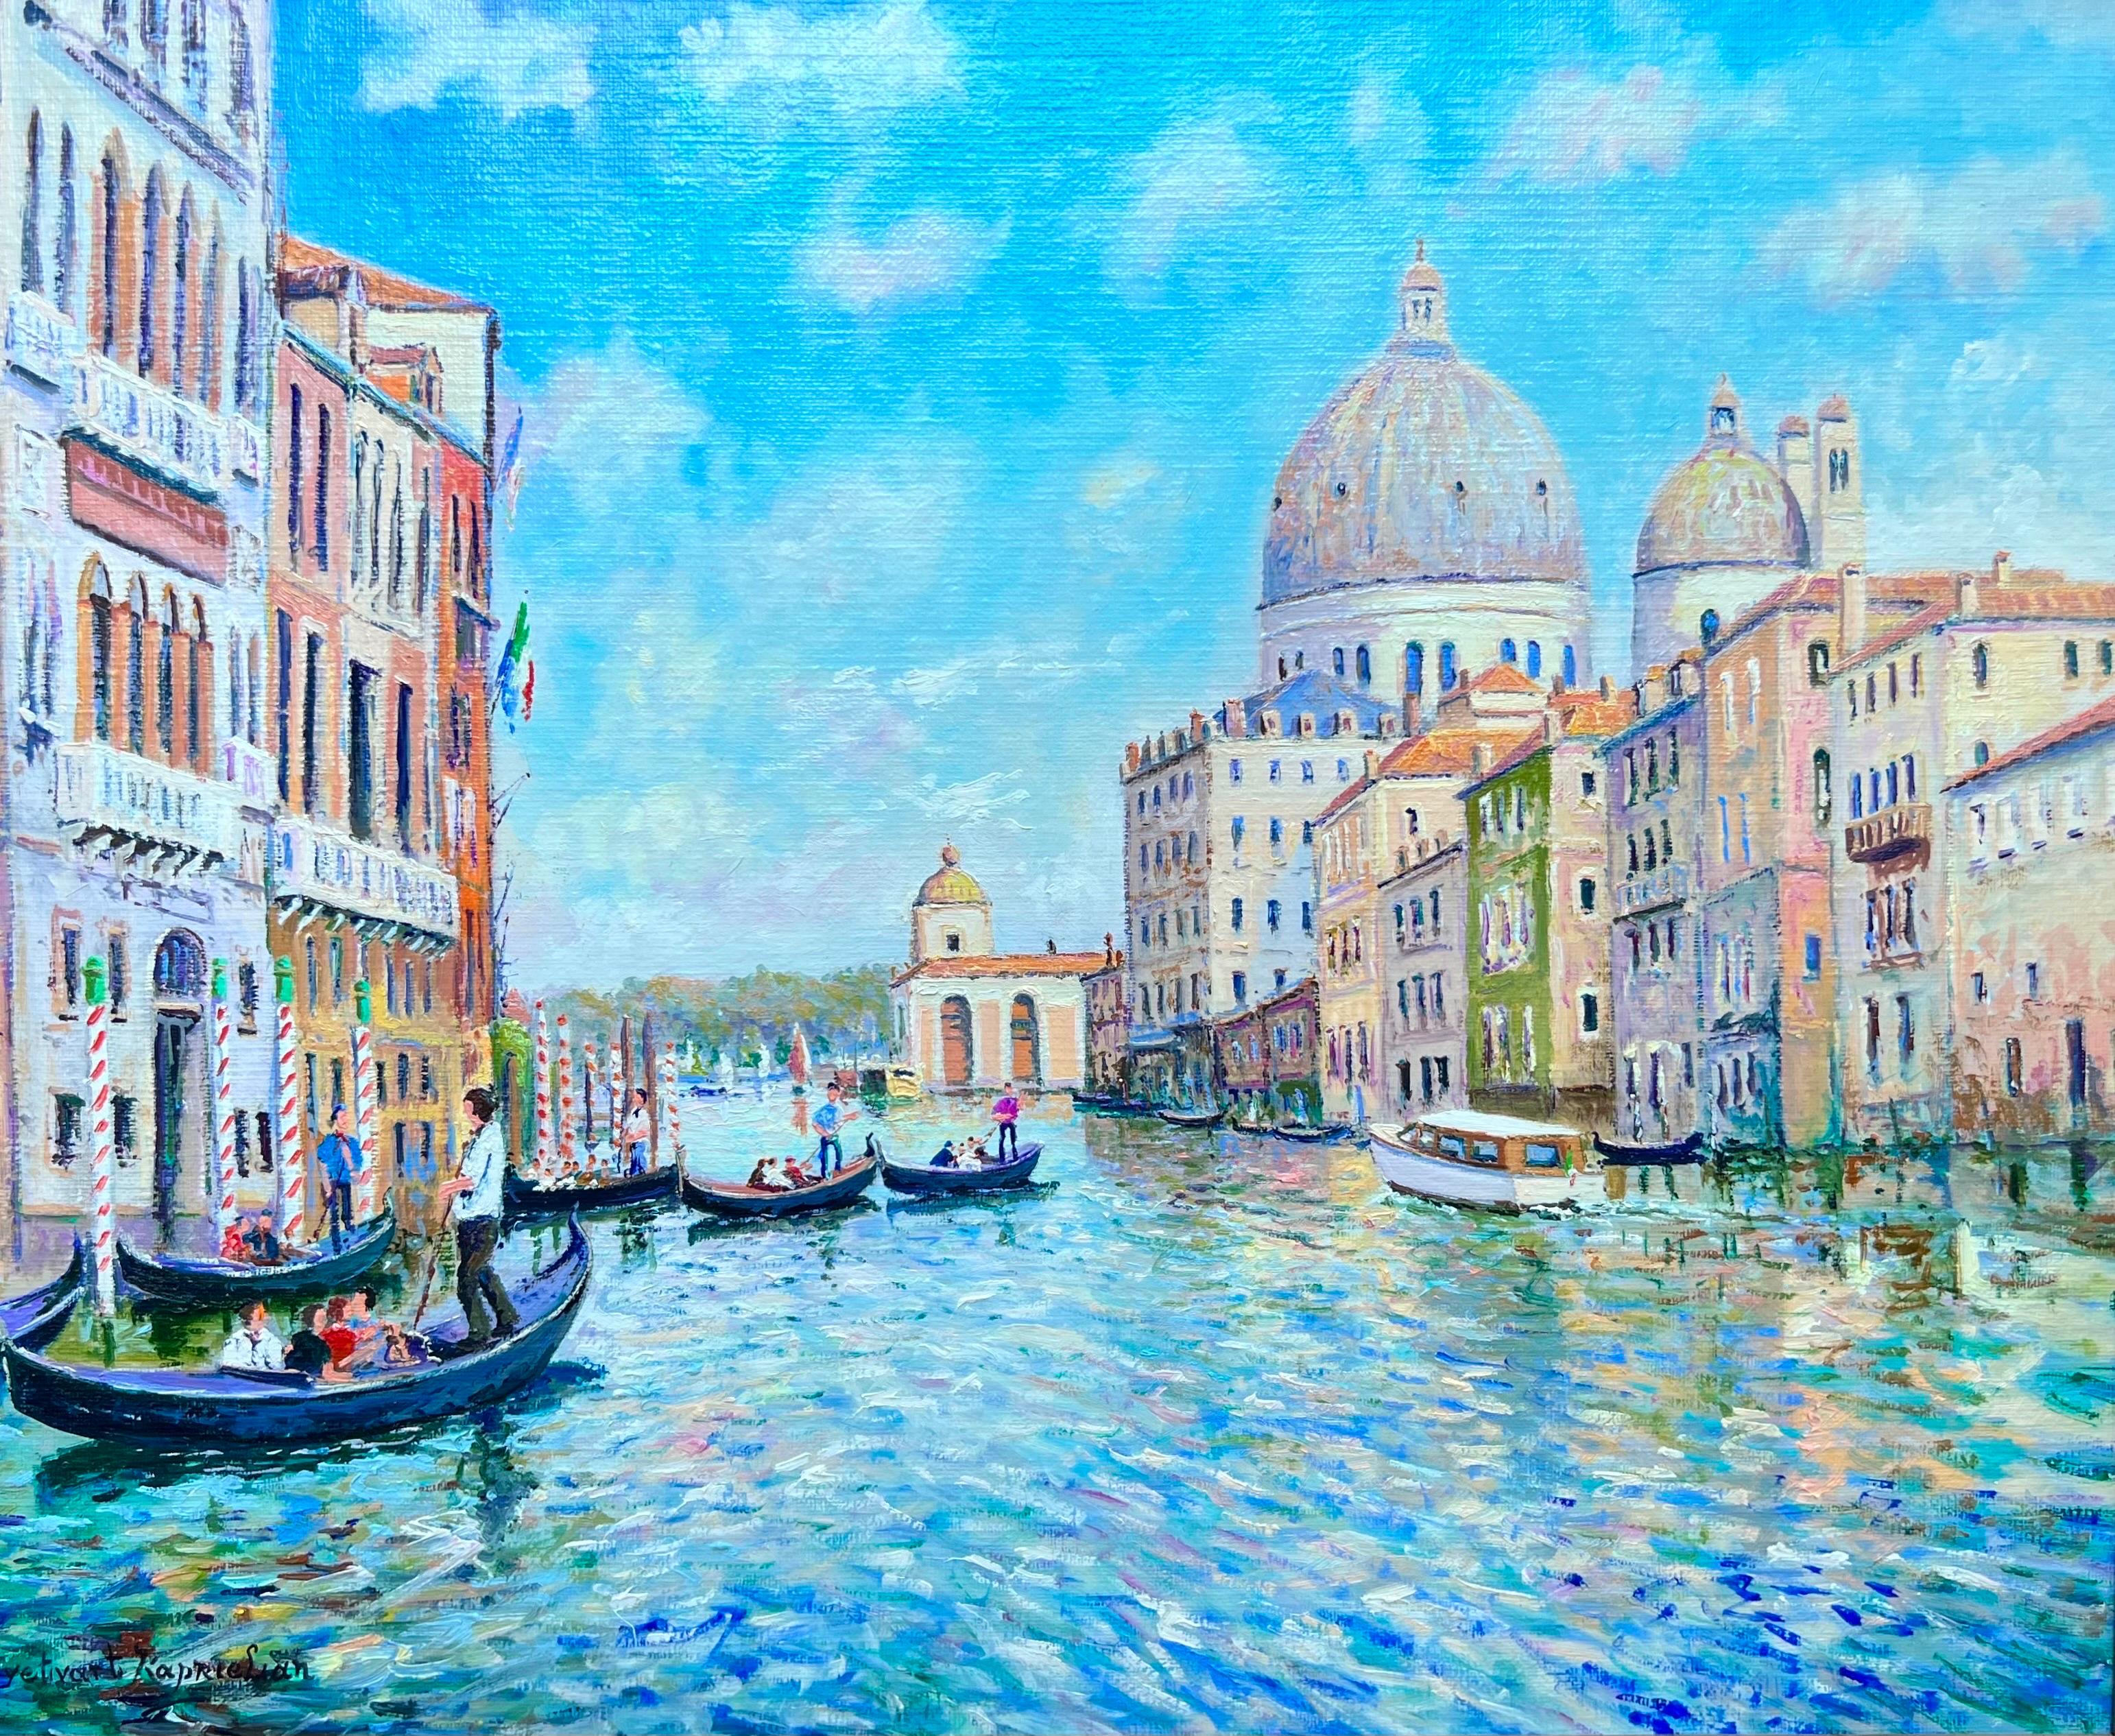 Der große Kanal in Venise.